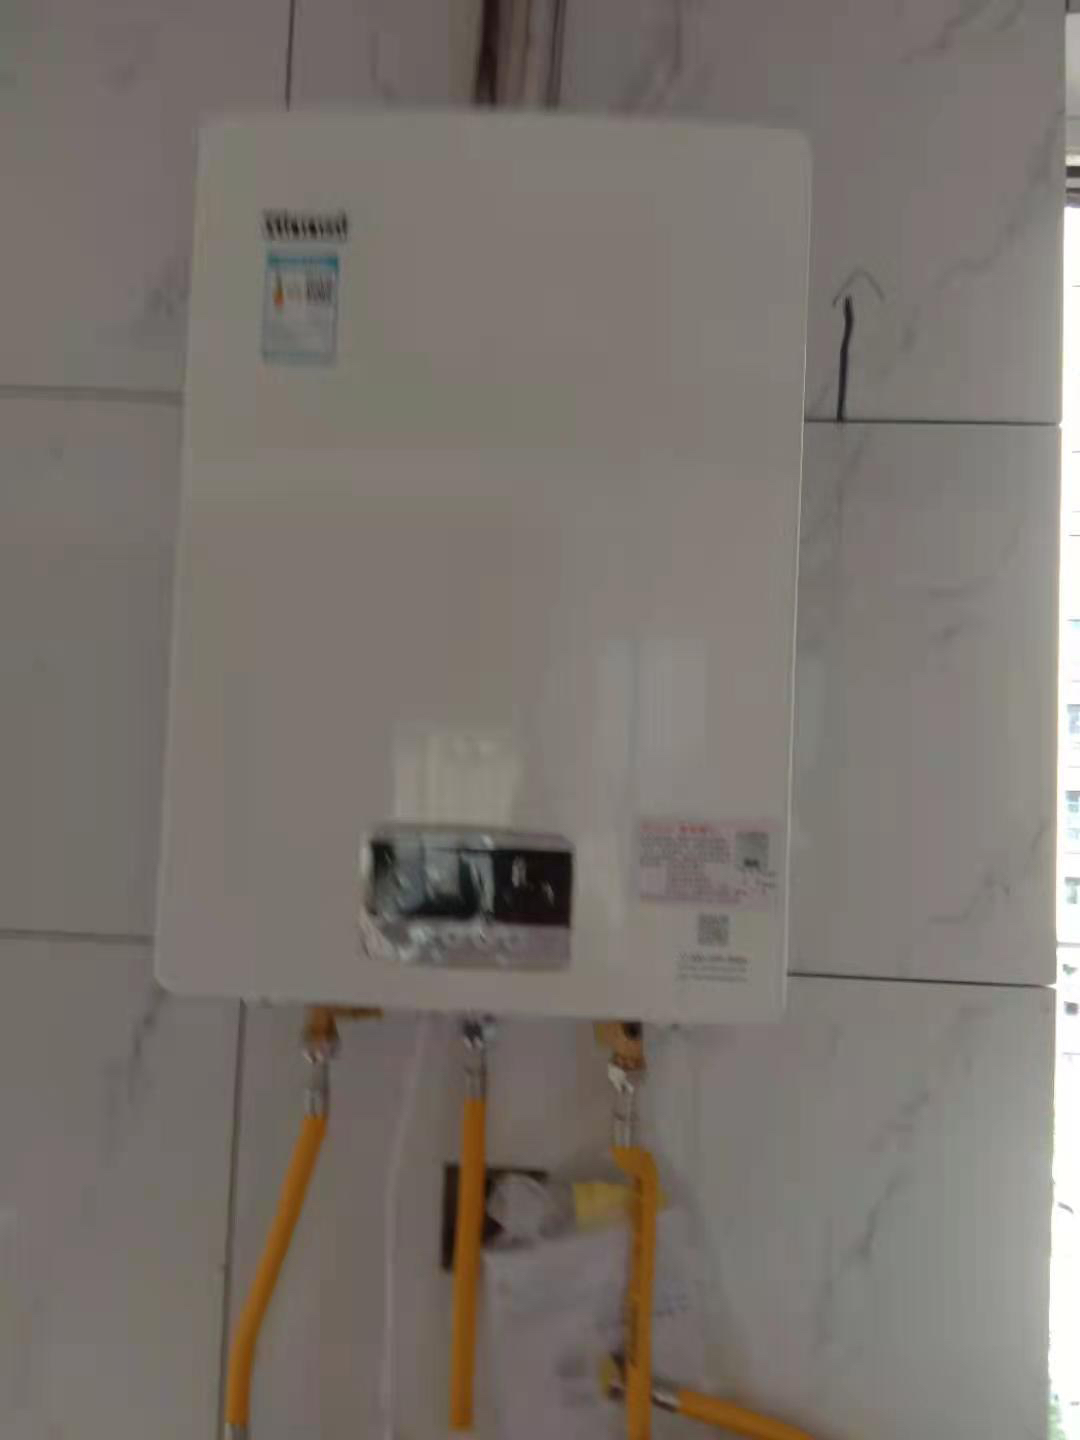 Rinnai/林内 16升C02 燃气热水器家用强排式变频恒温天然气16QC02防风防冻JSQ31-C02晒单图